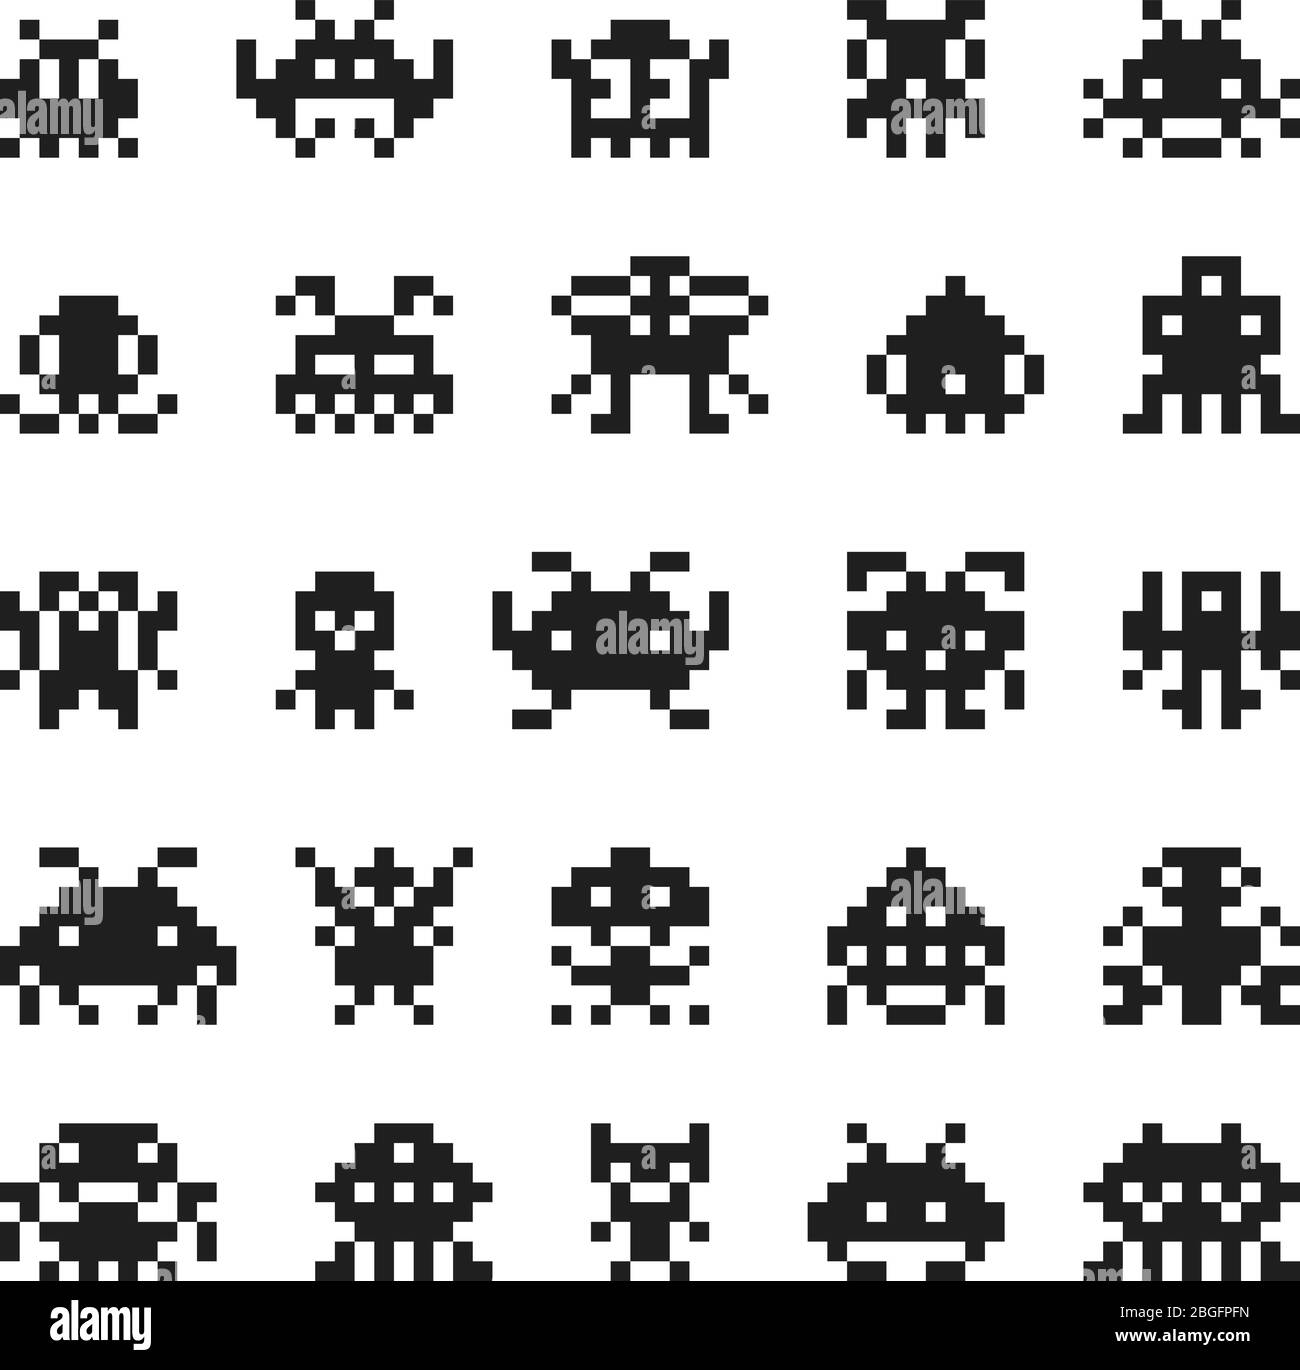 Pixel monster space invaders vector silhouette 8 bit icons. Illustration of monster pixel for game, robot alien character Stock Vector